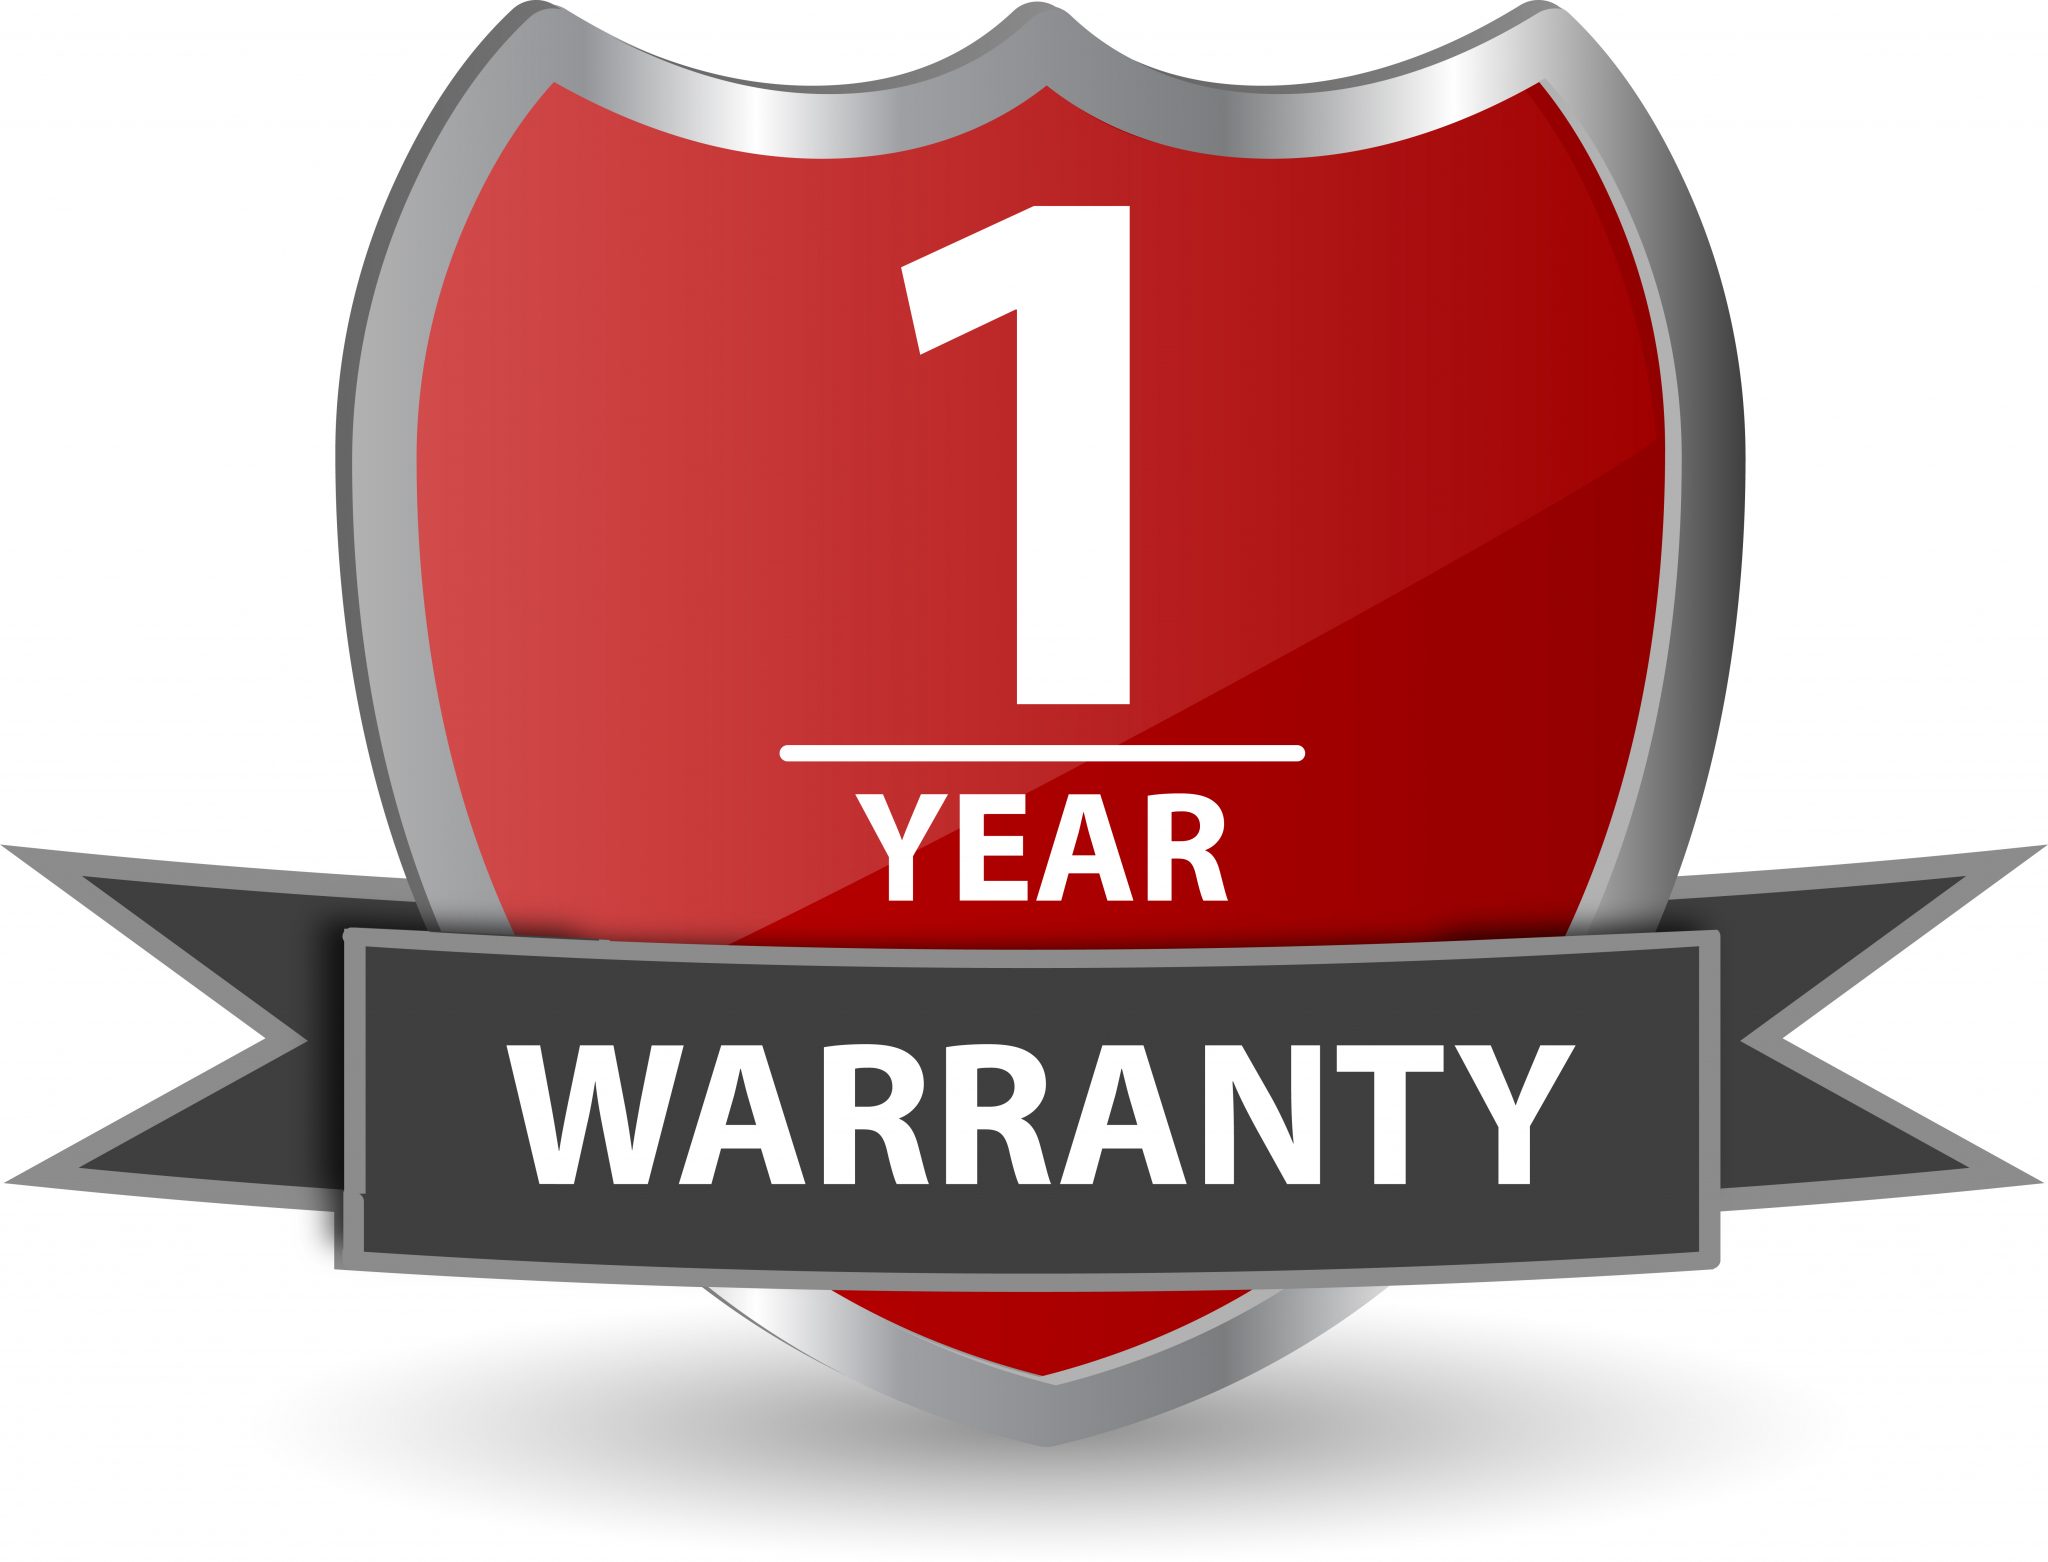 Warranty - One year